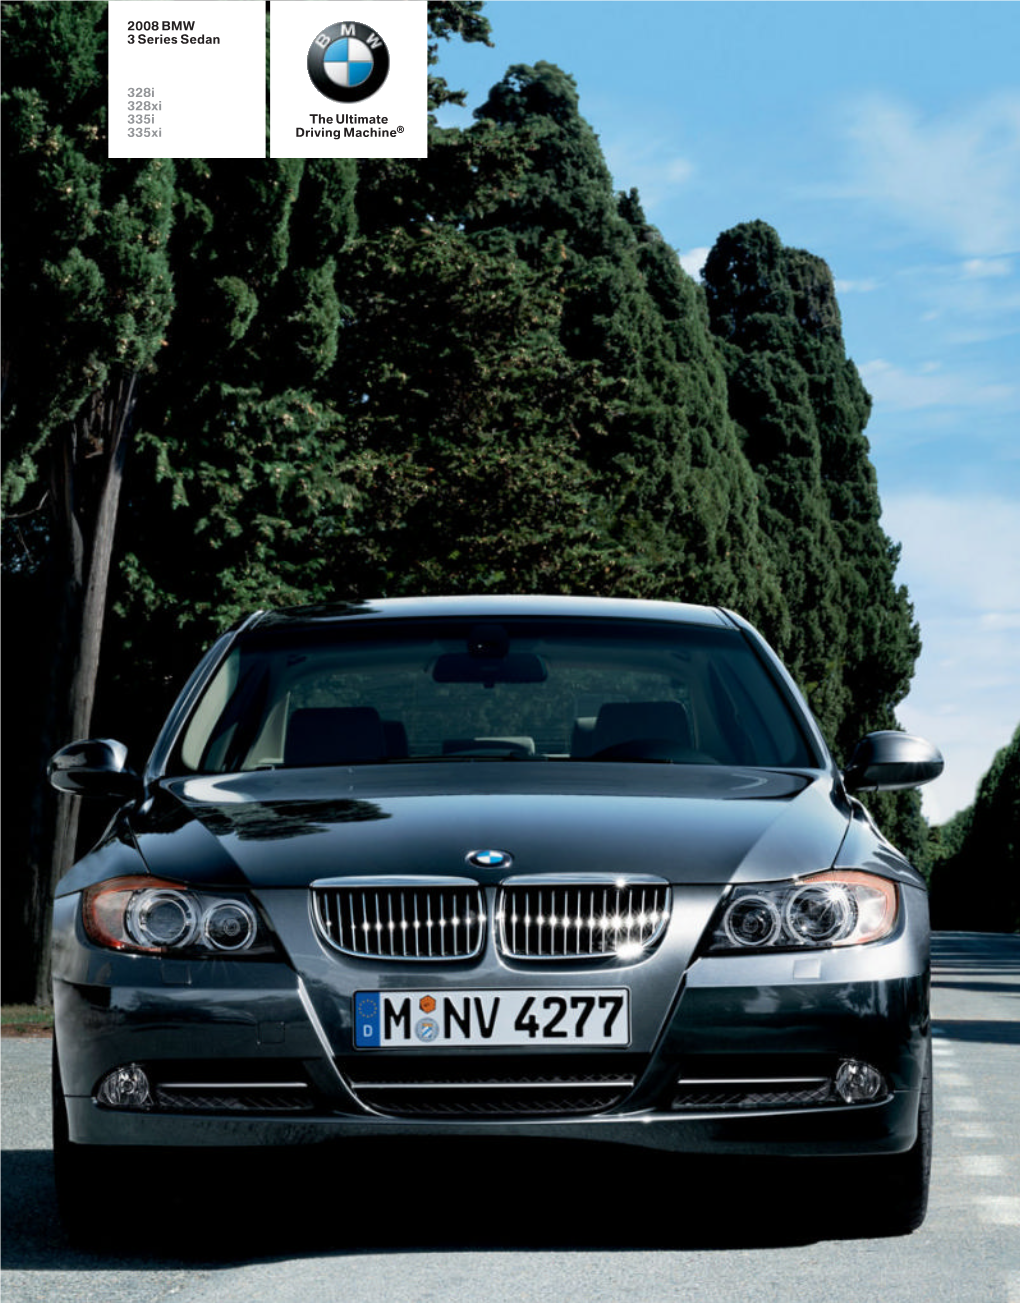 2008 BMW 3 Series Sedan 328I 328Xi 335I 335Xi the Ultimate Driving Machine